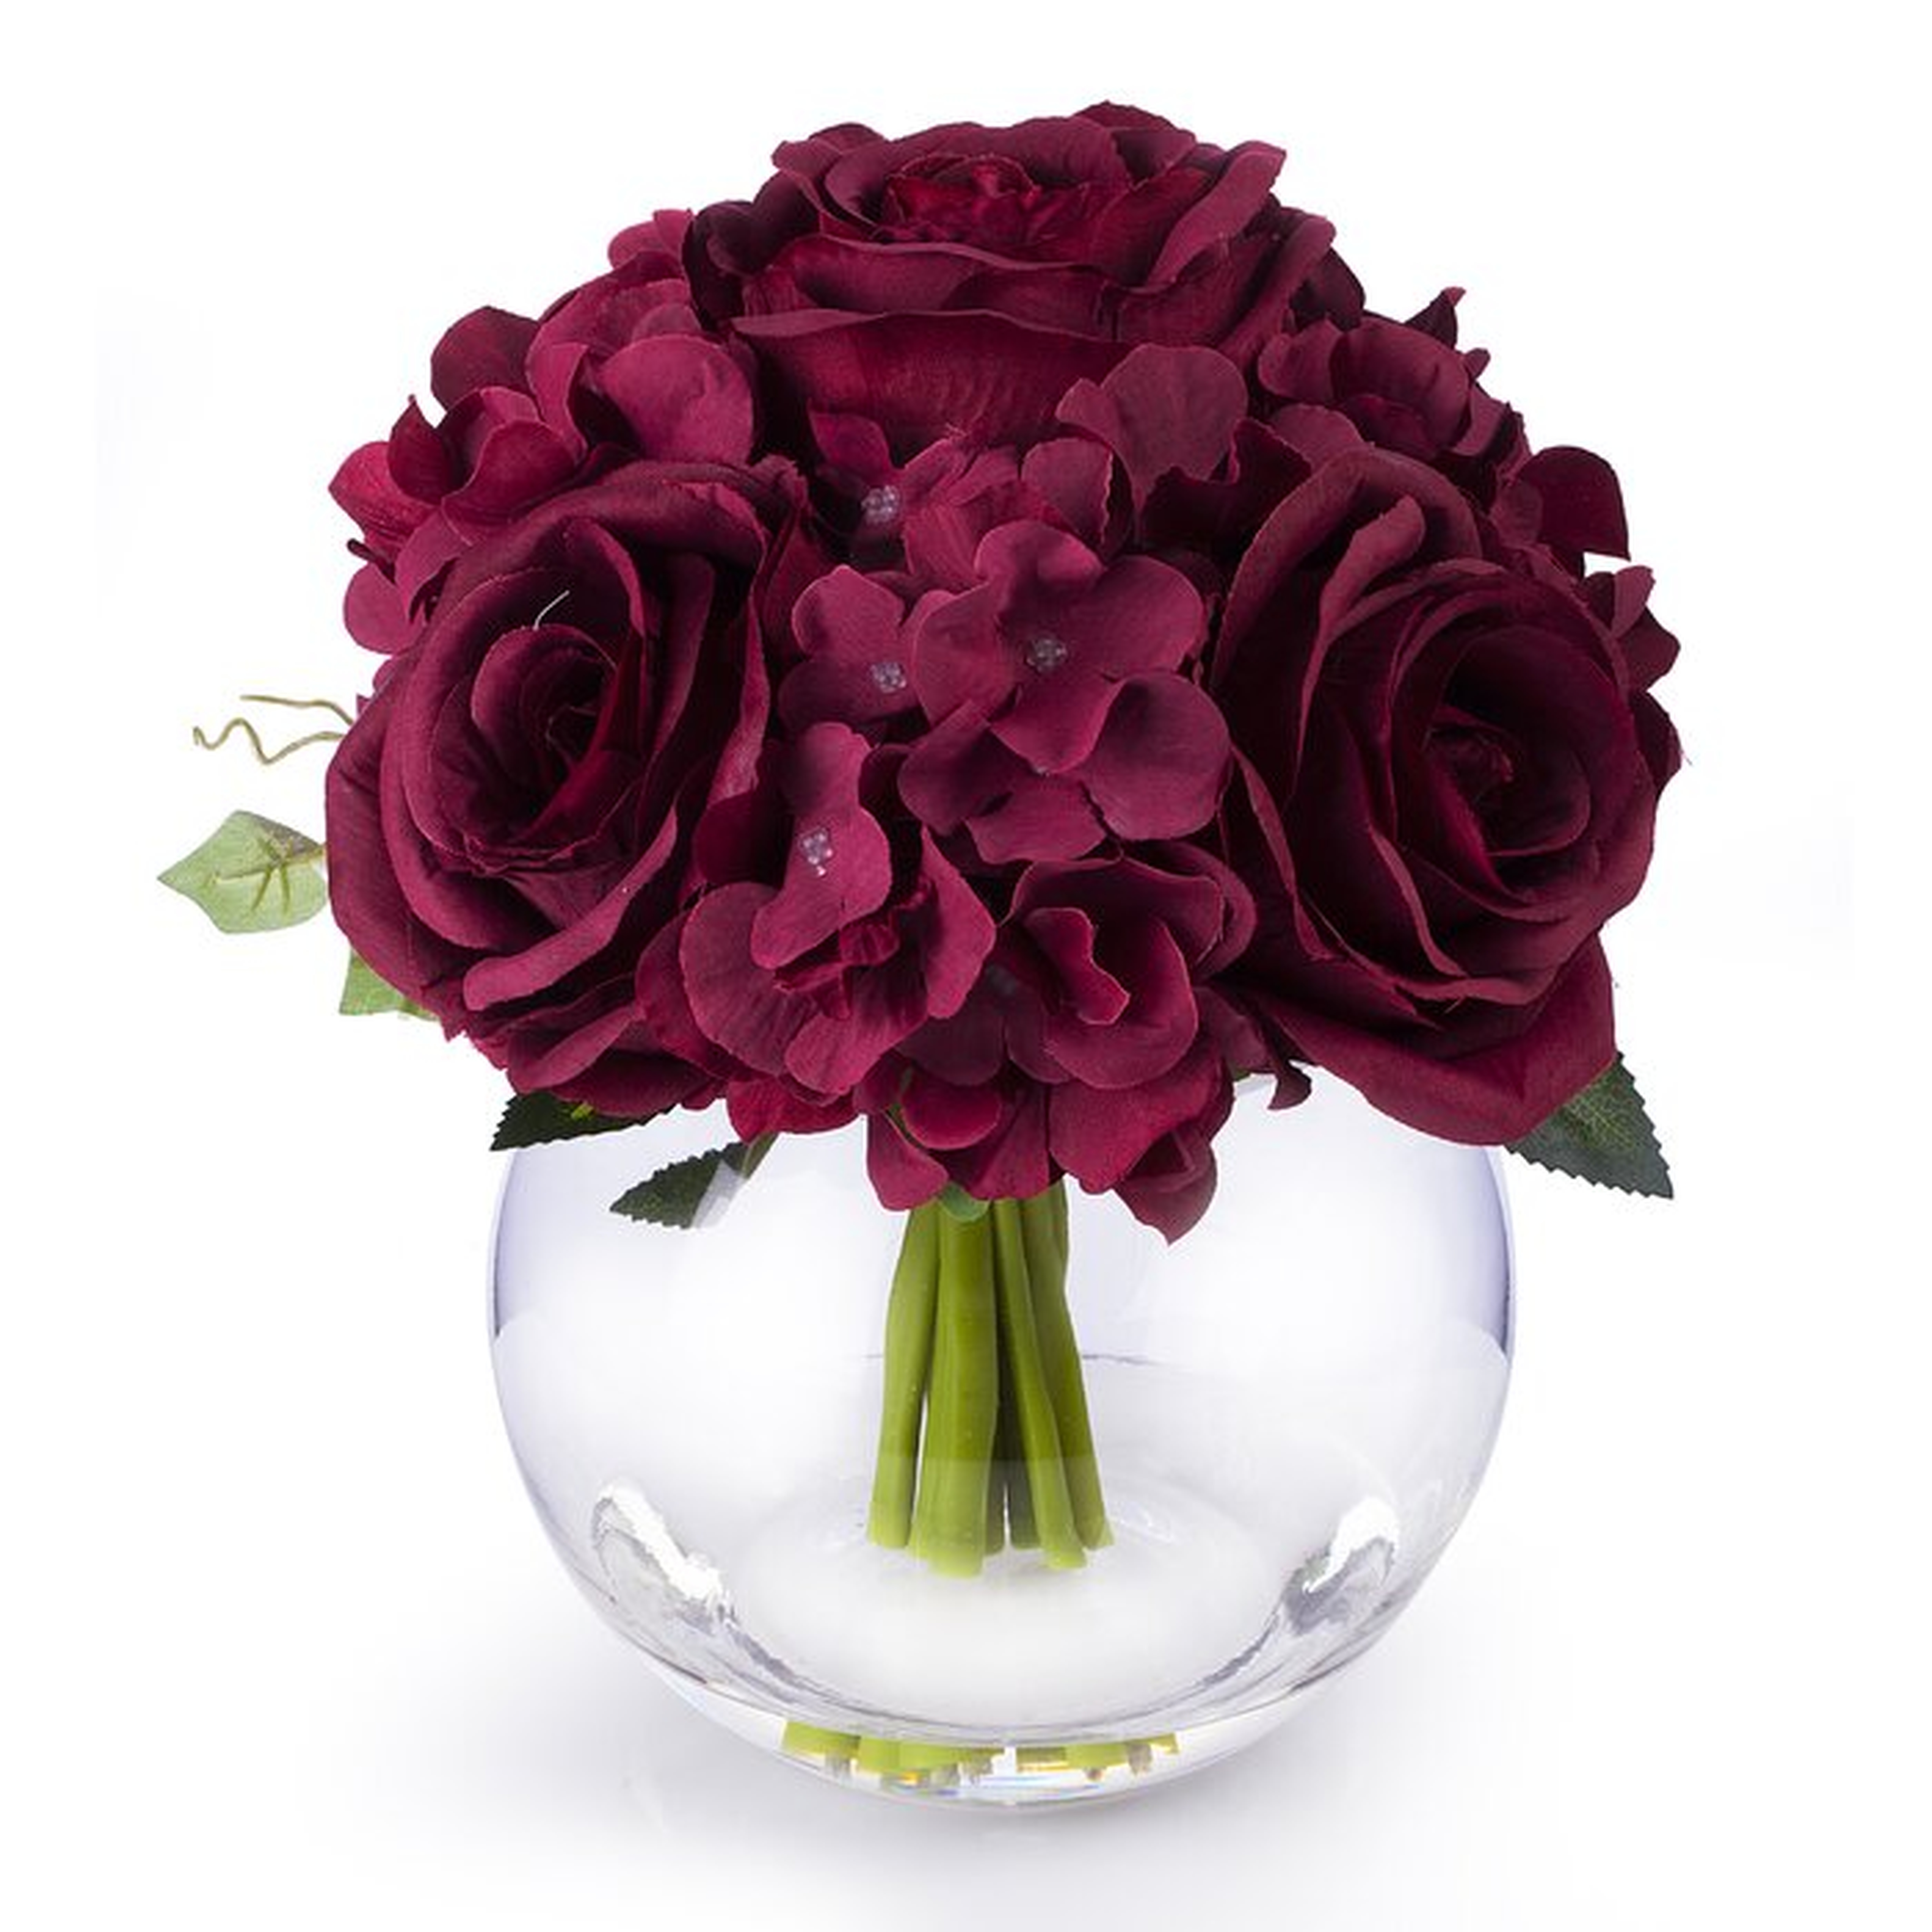 Mixed Rose and Hydrangea Floral Arrangement in Vase - Wayfair